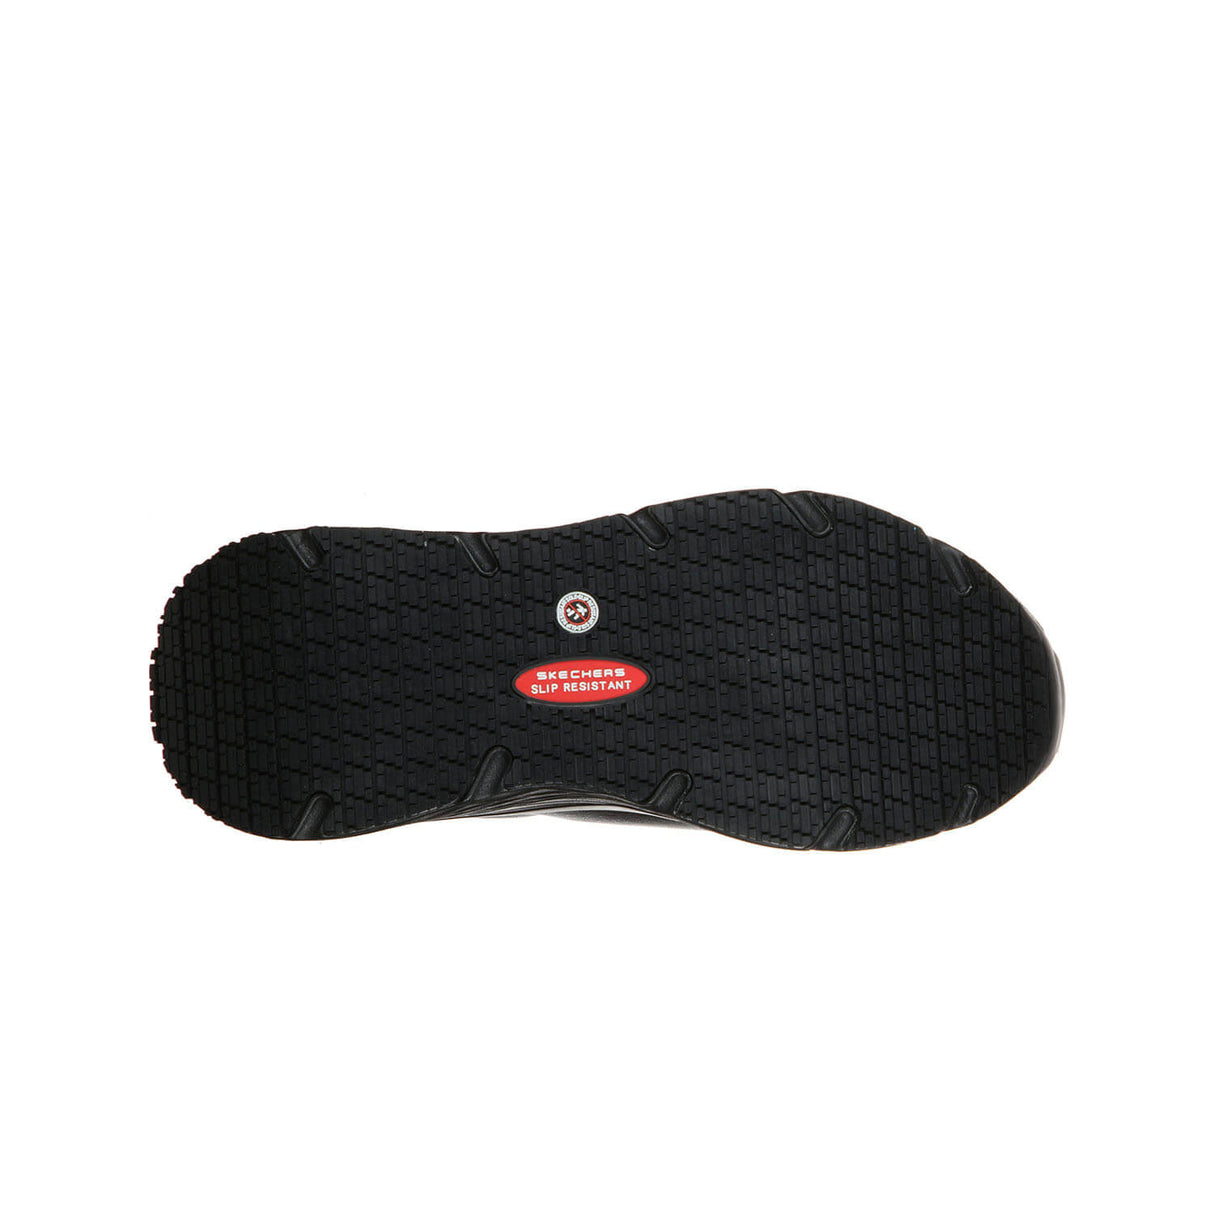 Skechers Work Elite Kajus Slip-Resistant Shoe 108015-3